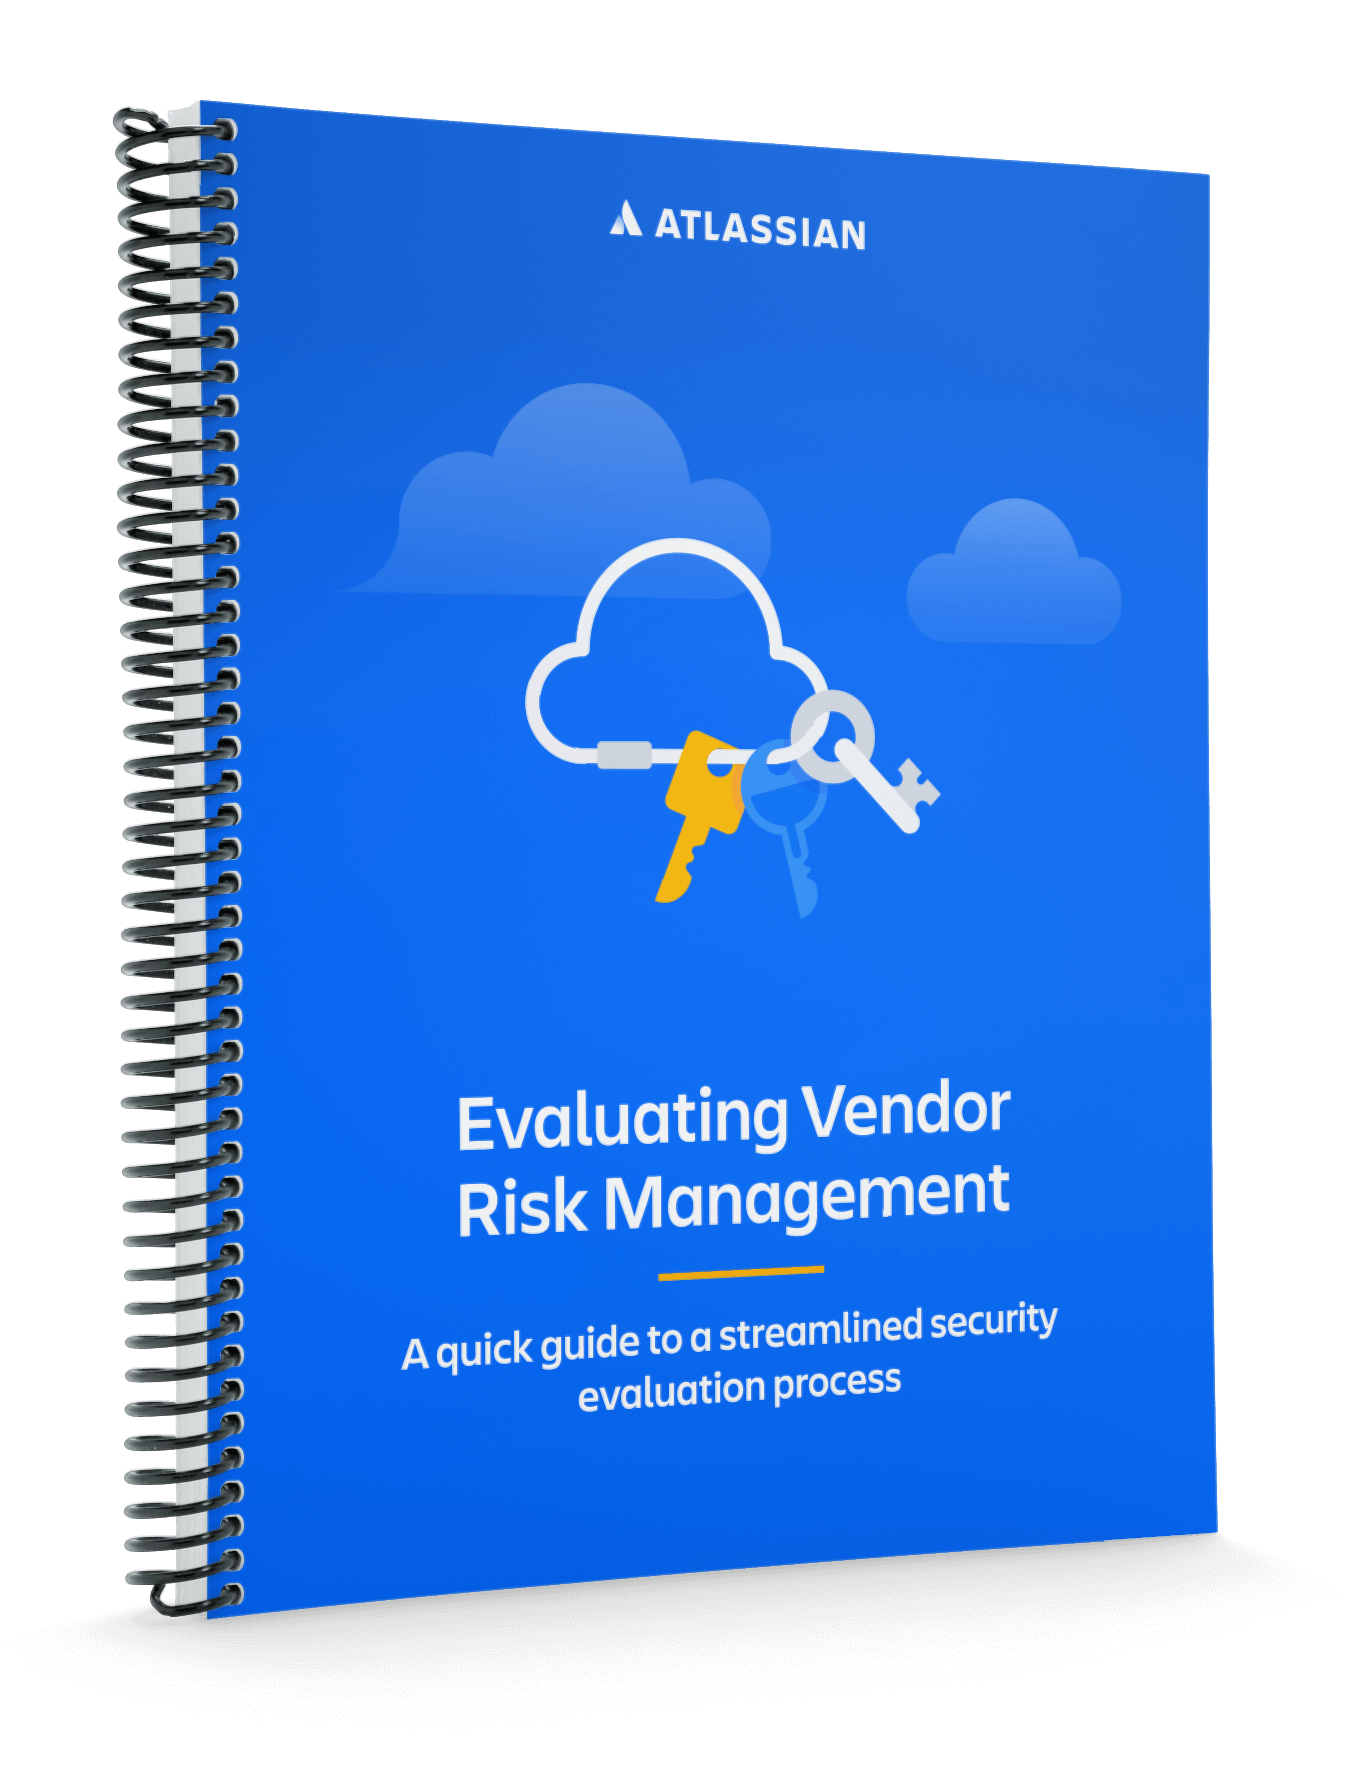 The Atlassian Guide to Evaluating Vendor Risk Management